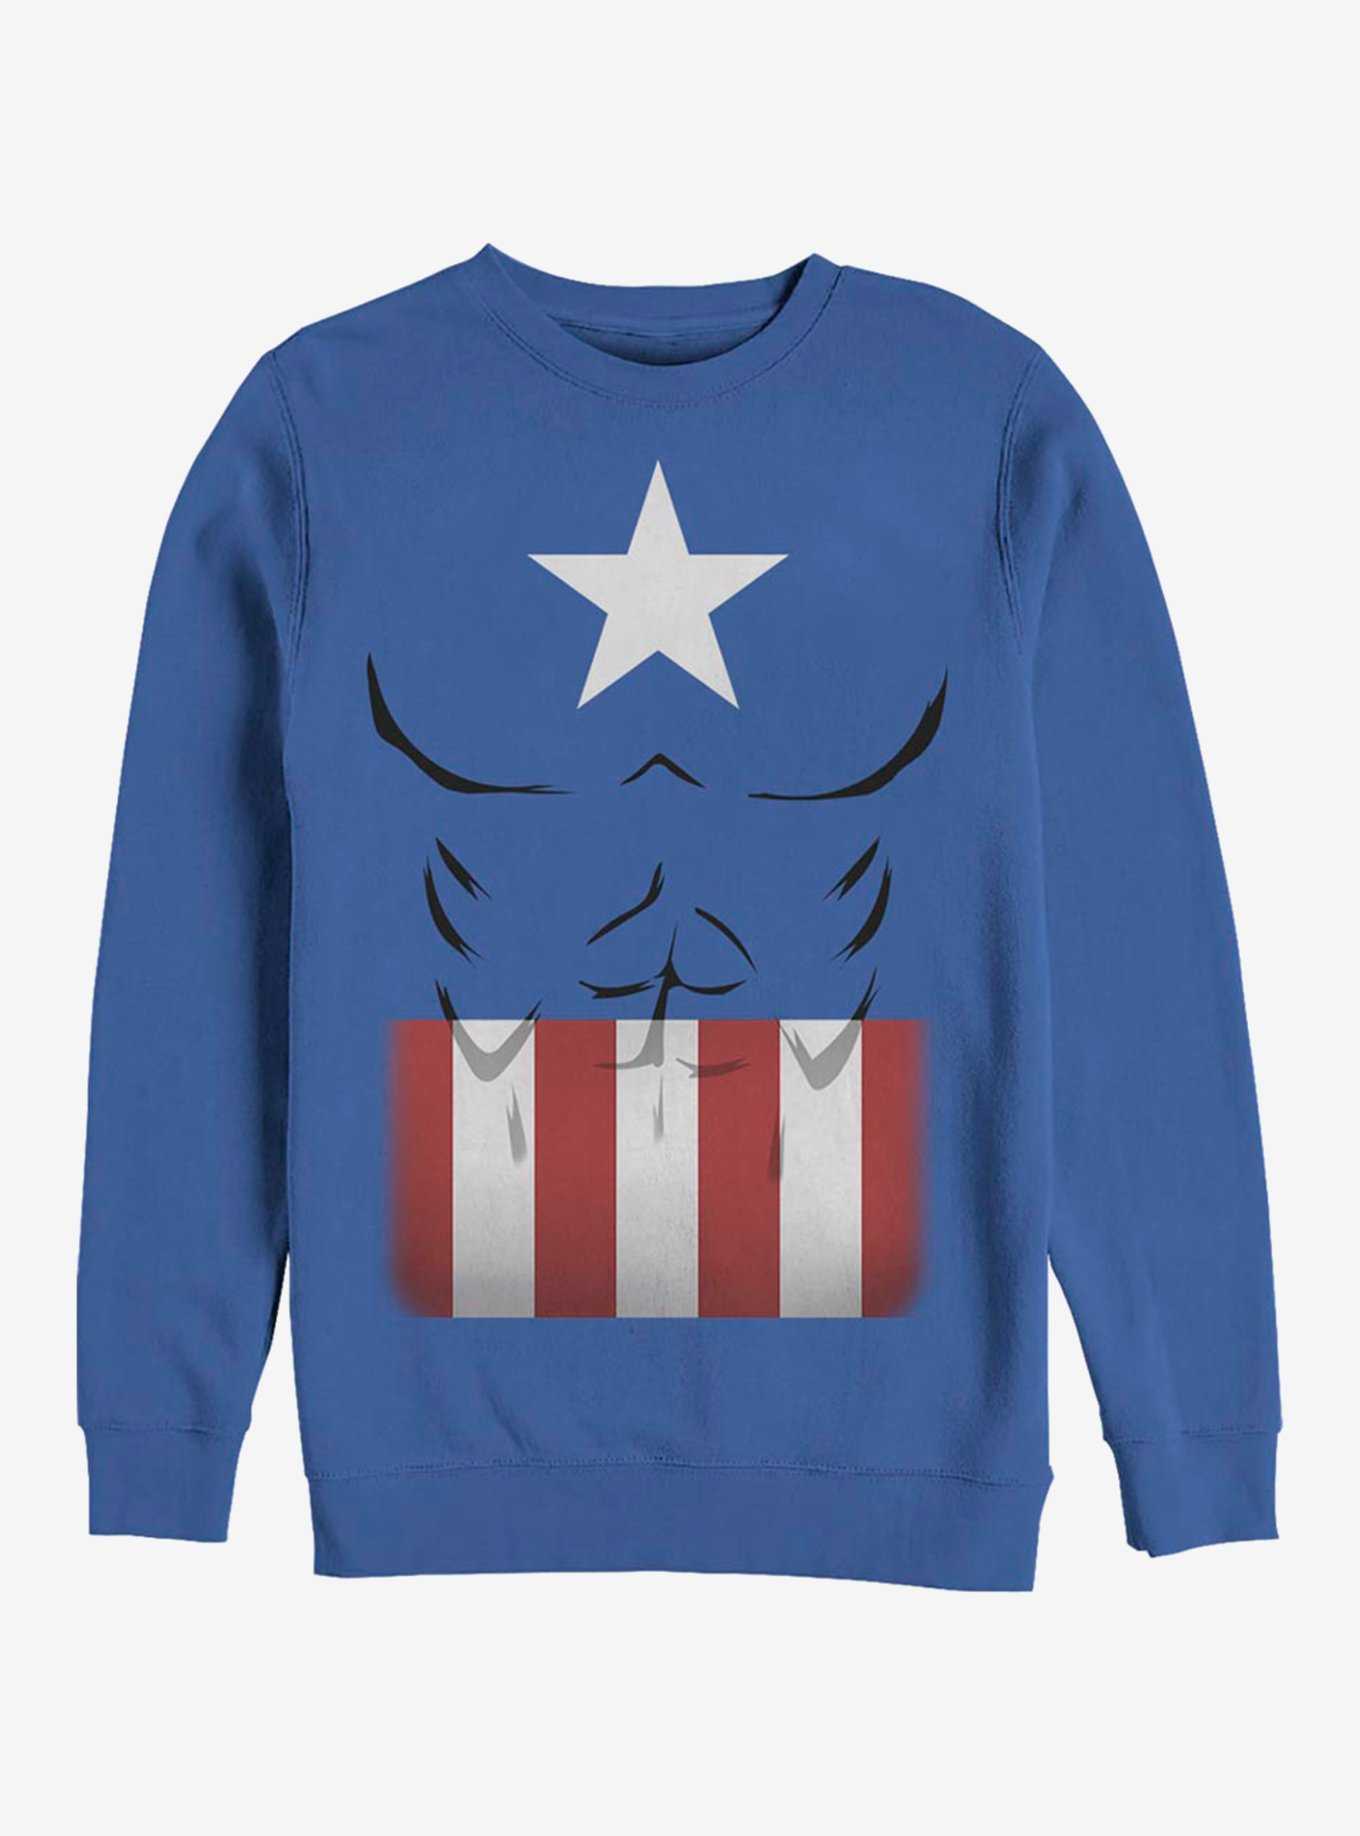 Marvel Captain America Captain Simple Suit Sweatshirt, , hi-res